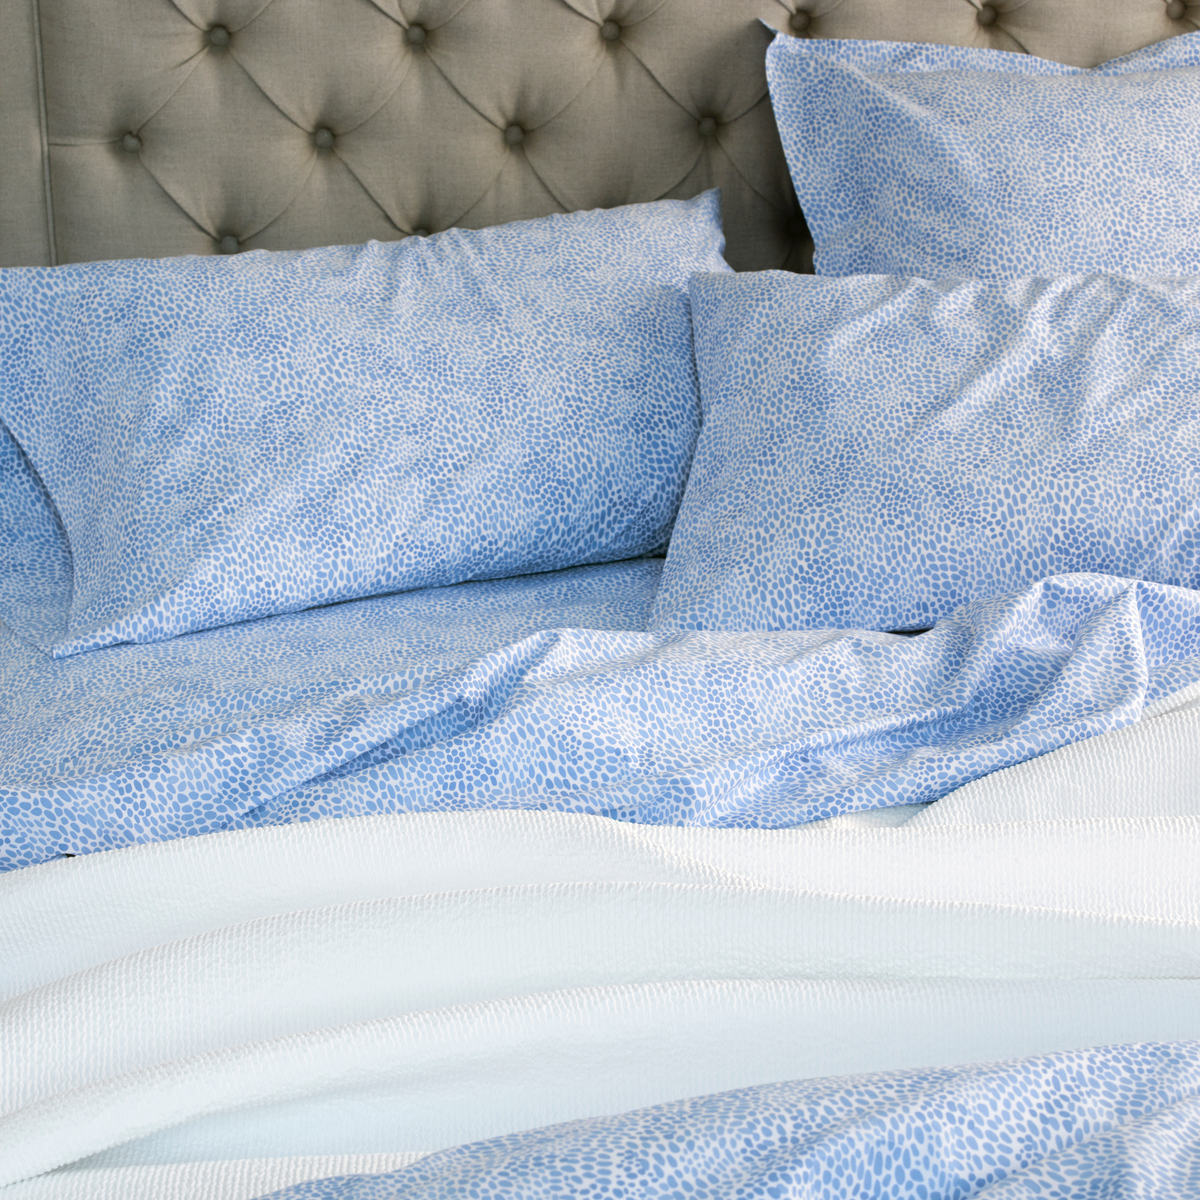 Sheets Closeup of Lulu DK Matouk Nikita Bedding in Azure Color